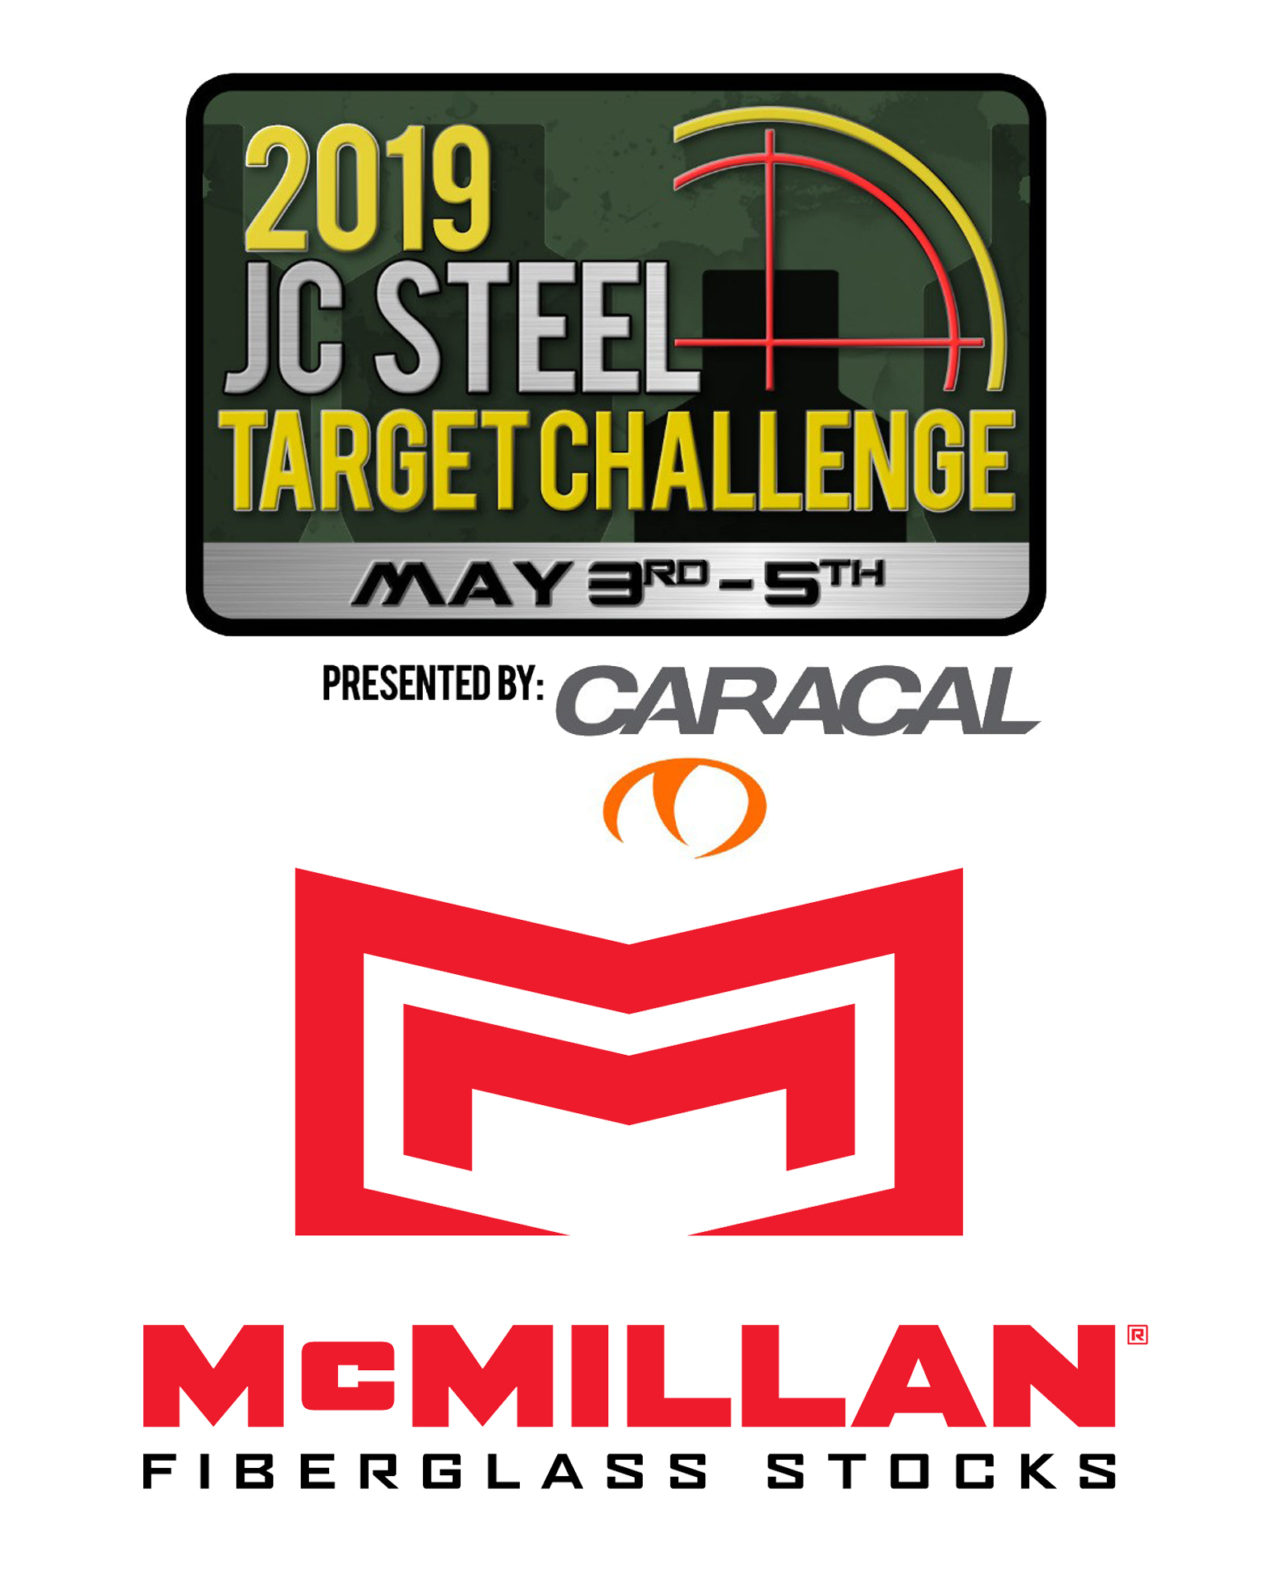 McMillan® to Support NRL 2019 JC Steel Target Challenge